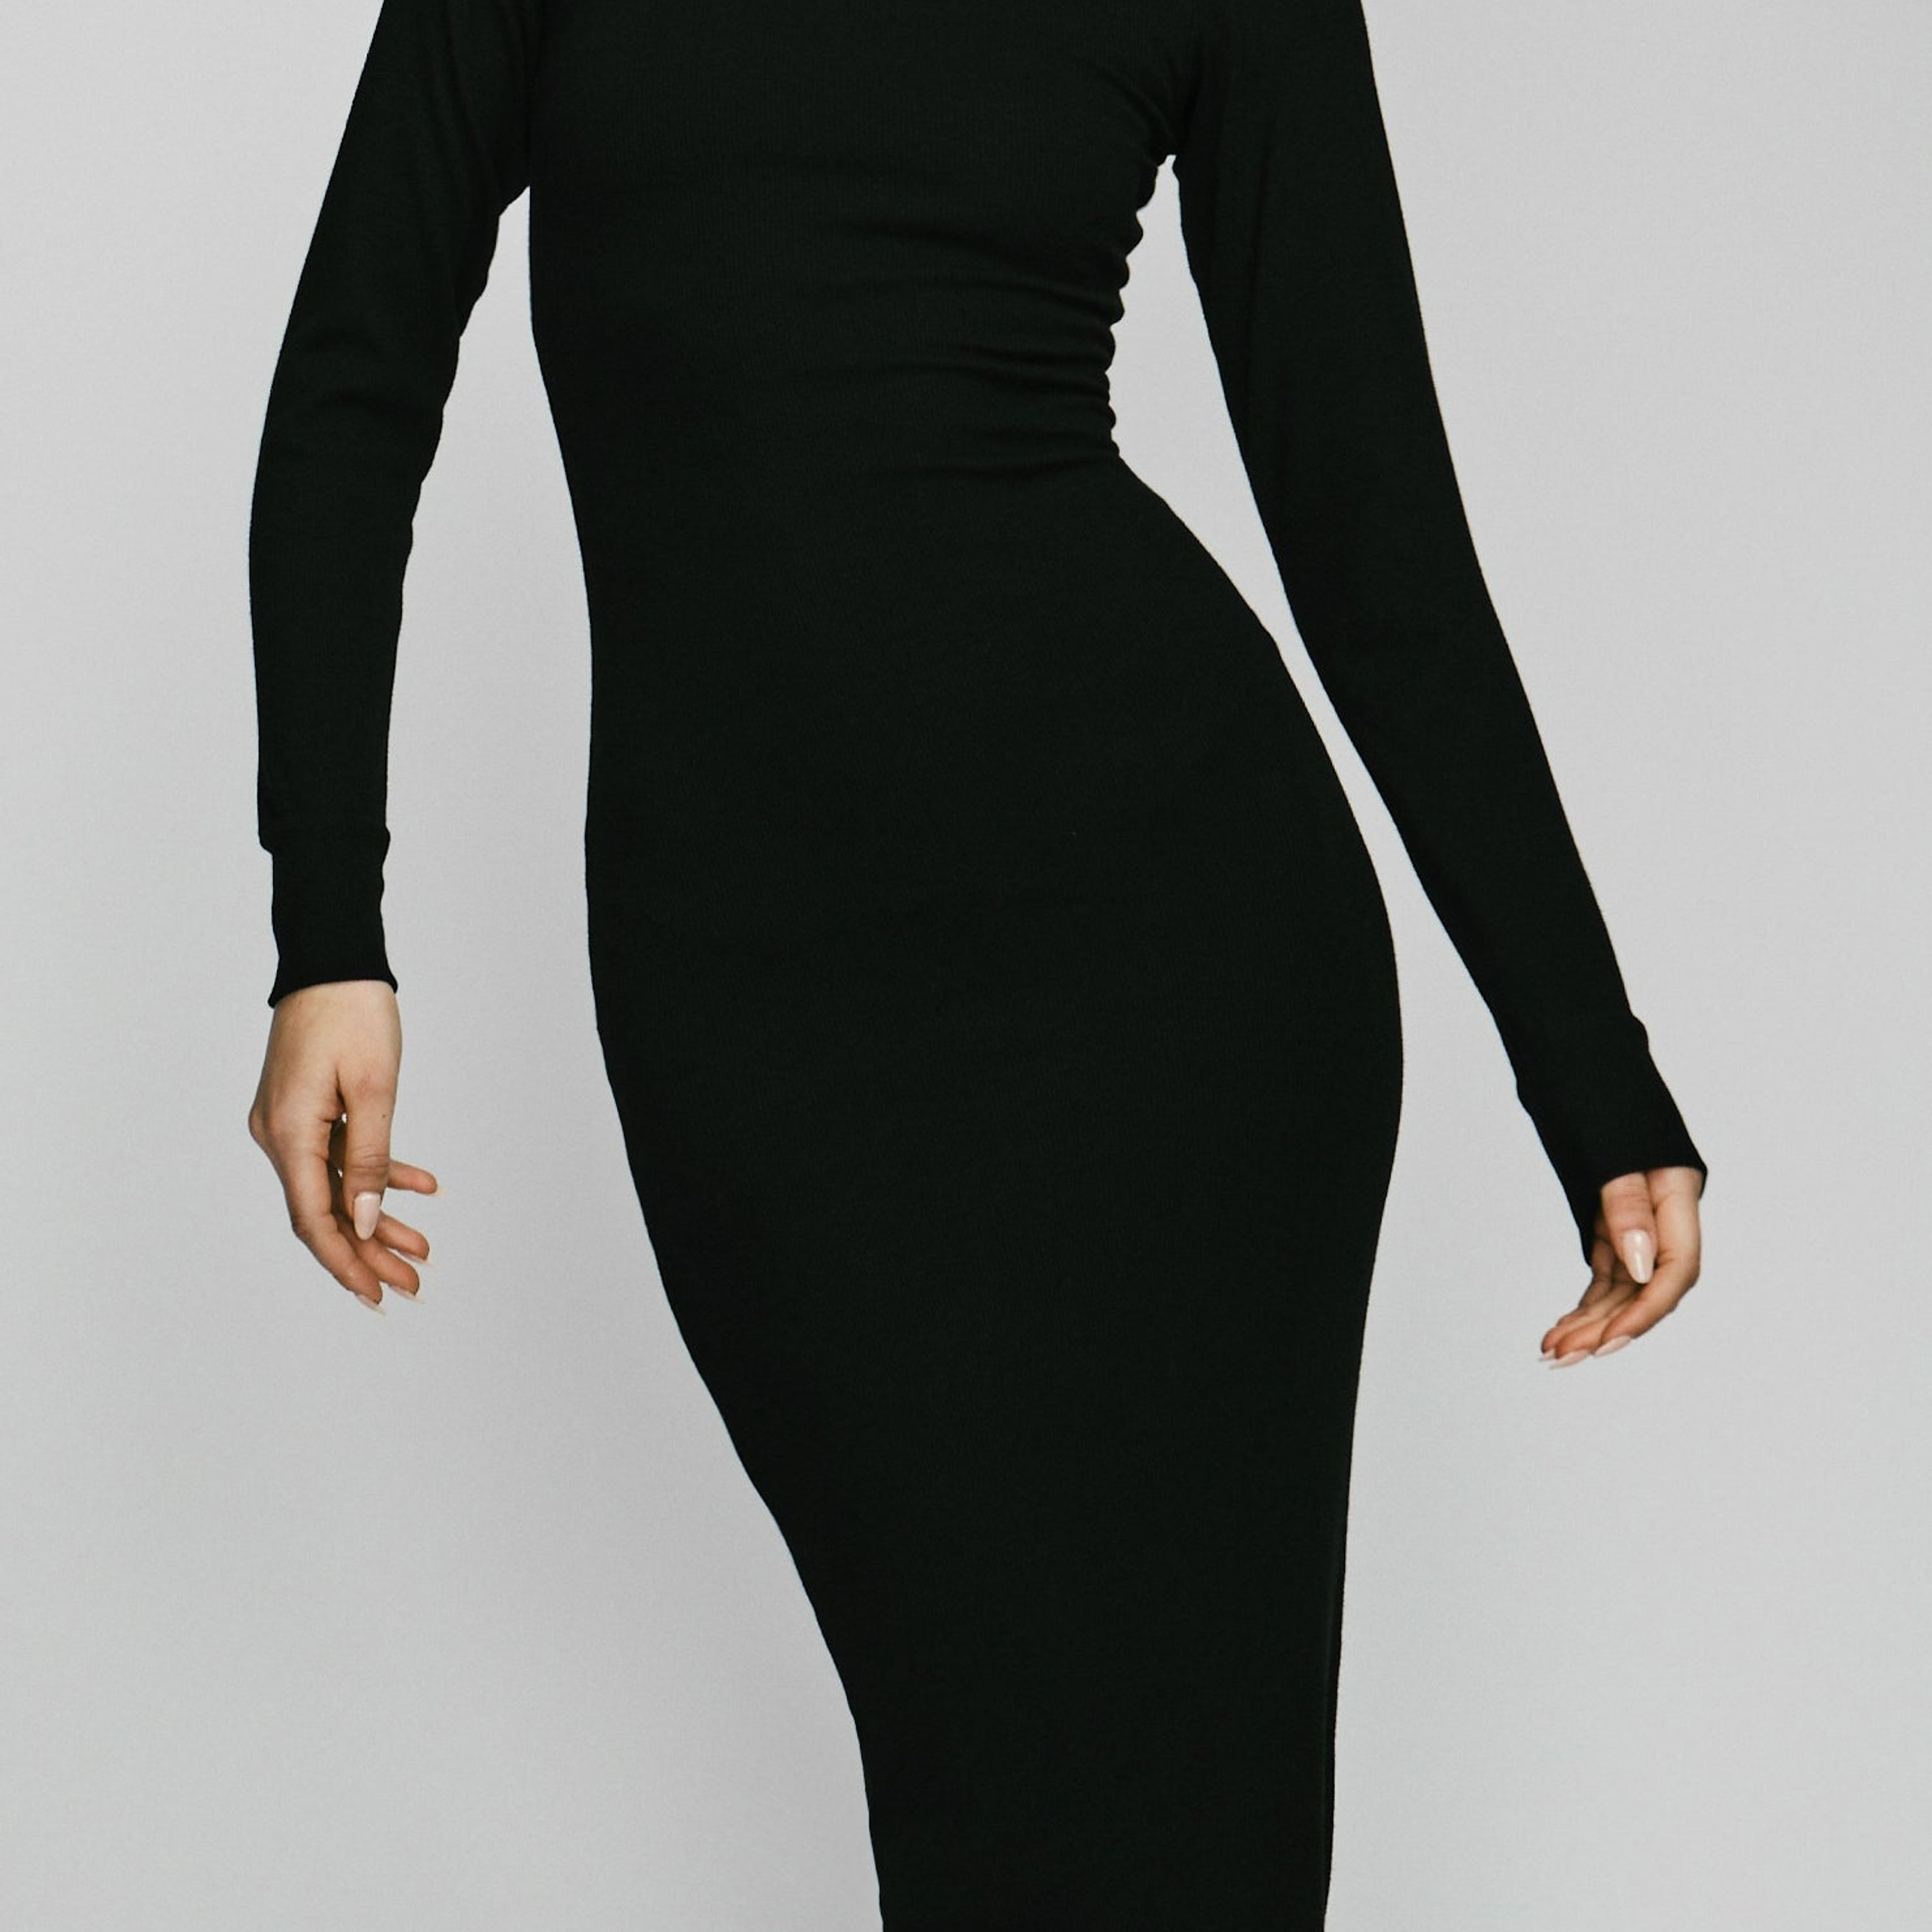 Éterne Long Sleeve Turtleneck Maxi Dress Black on Marmalade